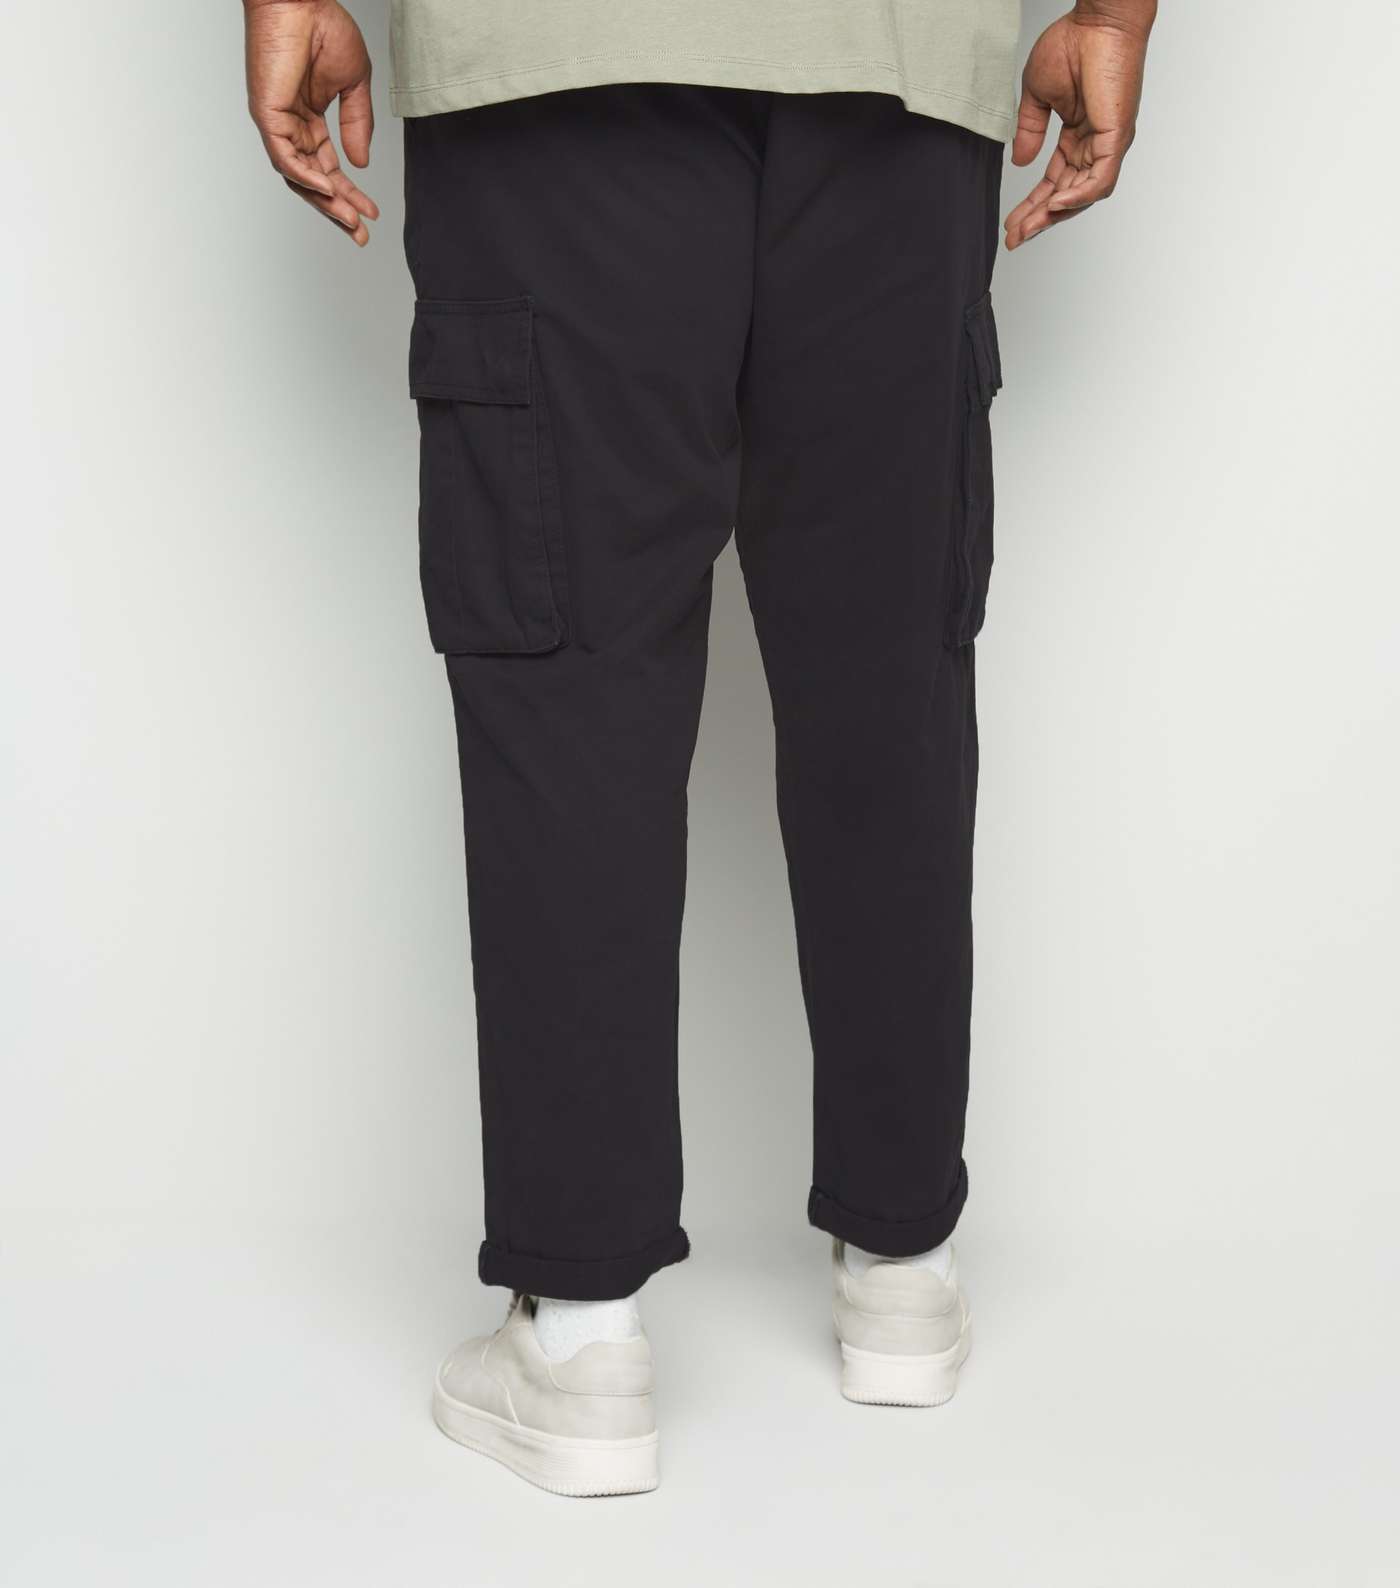 https://media2.newlookassets.com/i/newlook/651806401M2/mens/clothing/trousers/plus-size-black-cotton-cargo-trousers.jpg?strip=true&w=1400&qlt=60&fmt=jpeg